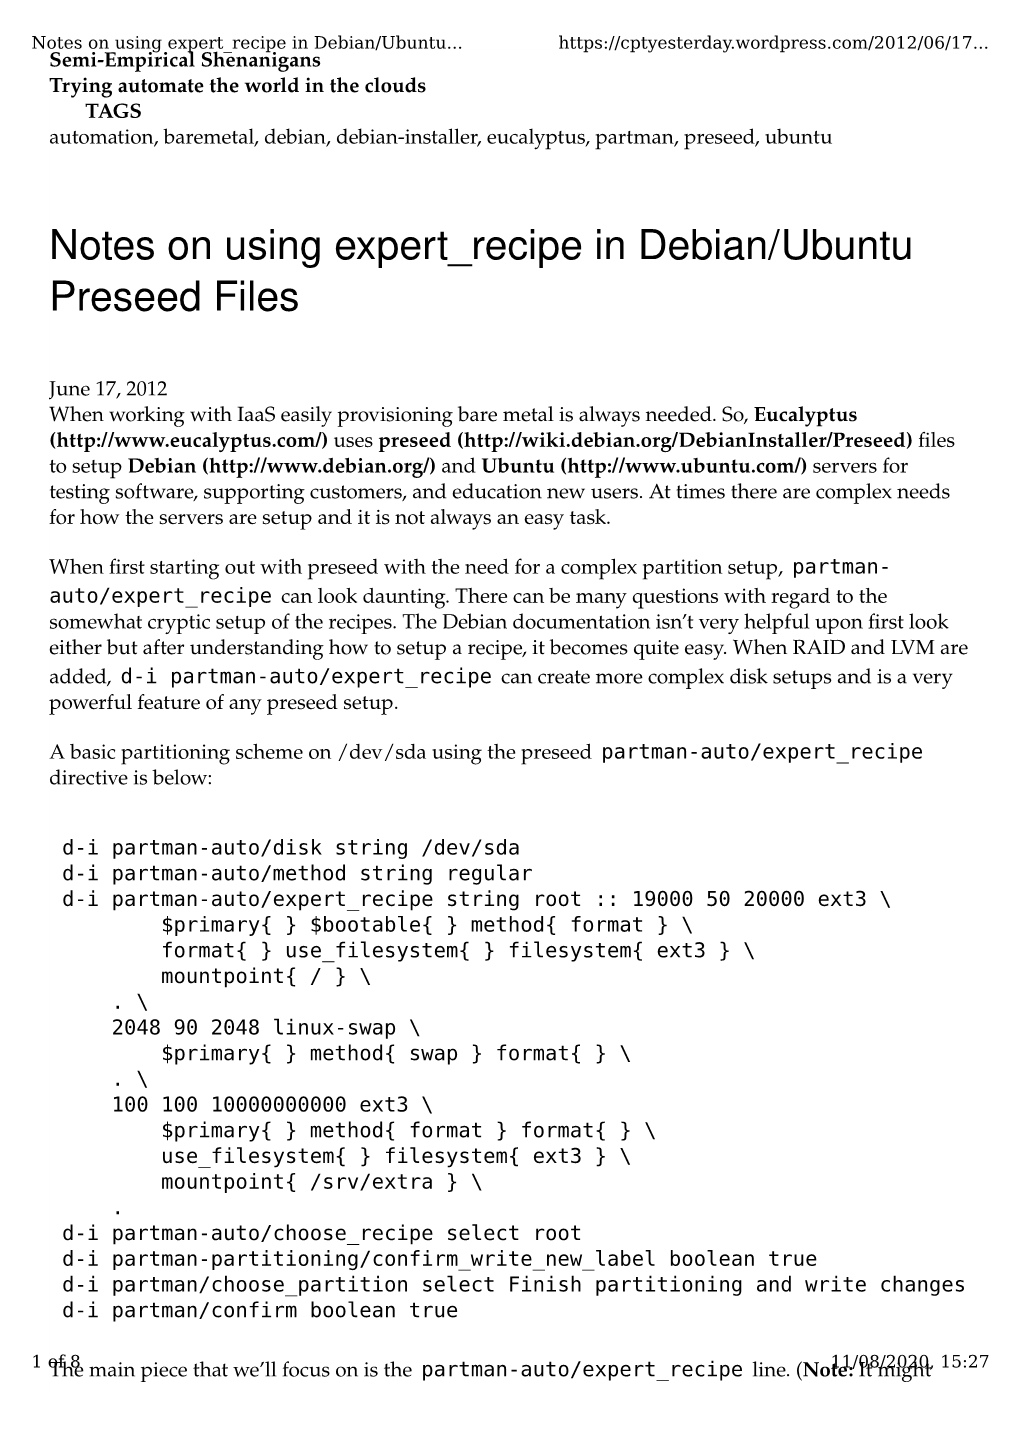 Notes on Using Expert Recipe in Debian/Ubuntu Preseed Files